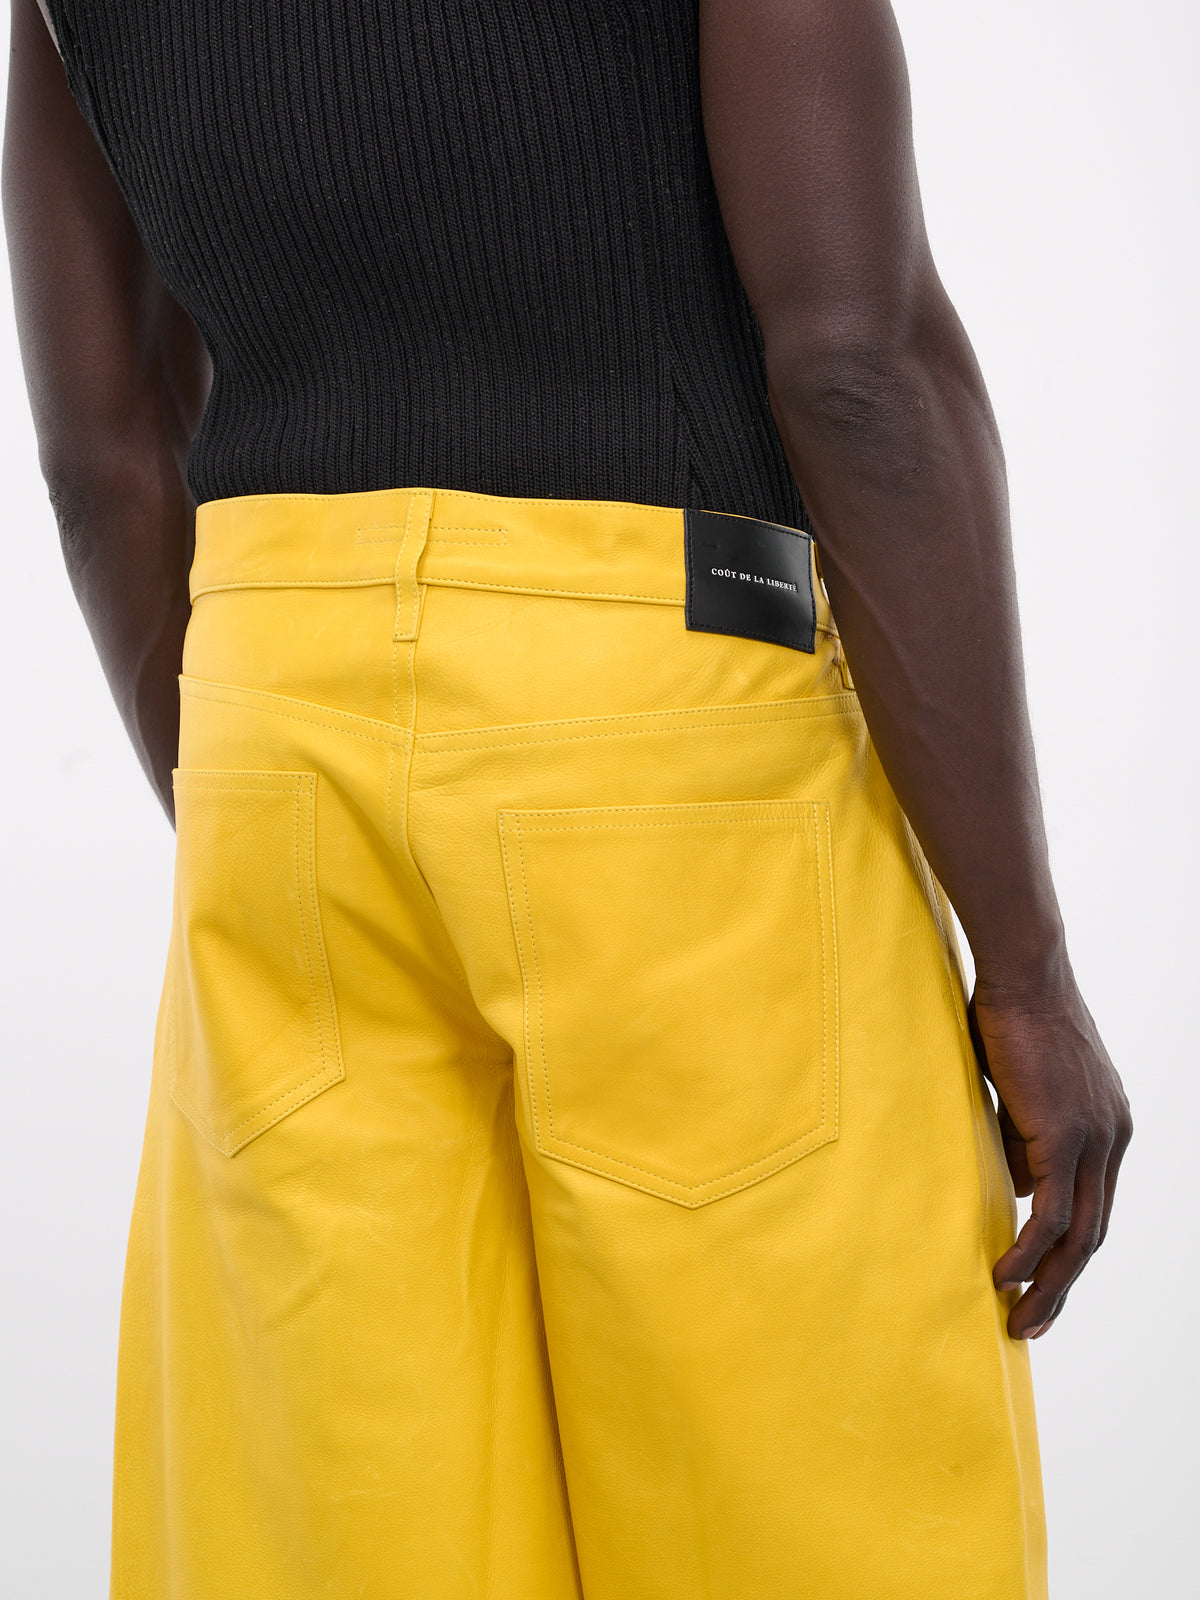 Zander Baby G Leather Shorts (M102390-732-BRIGHT-YELLOW)